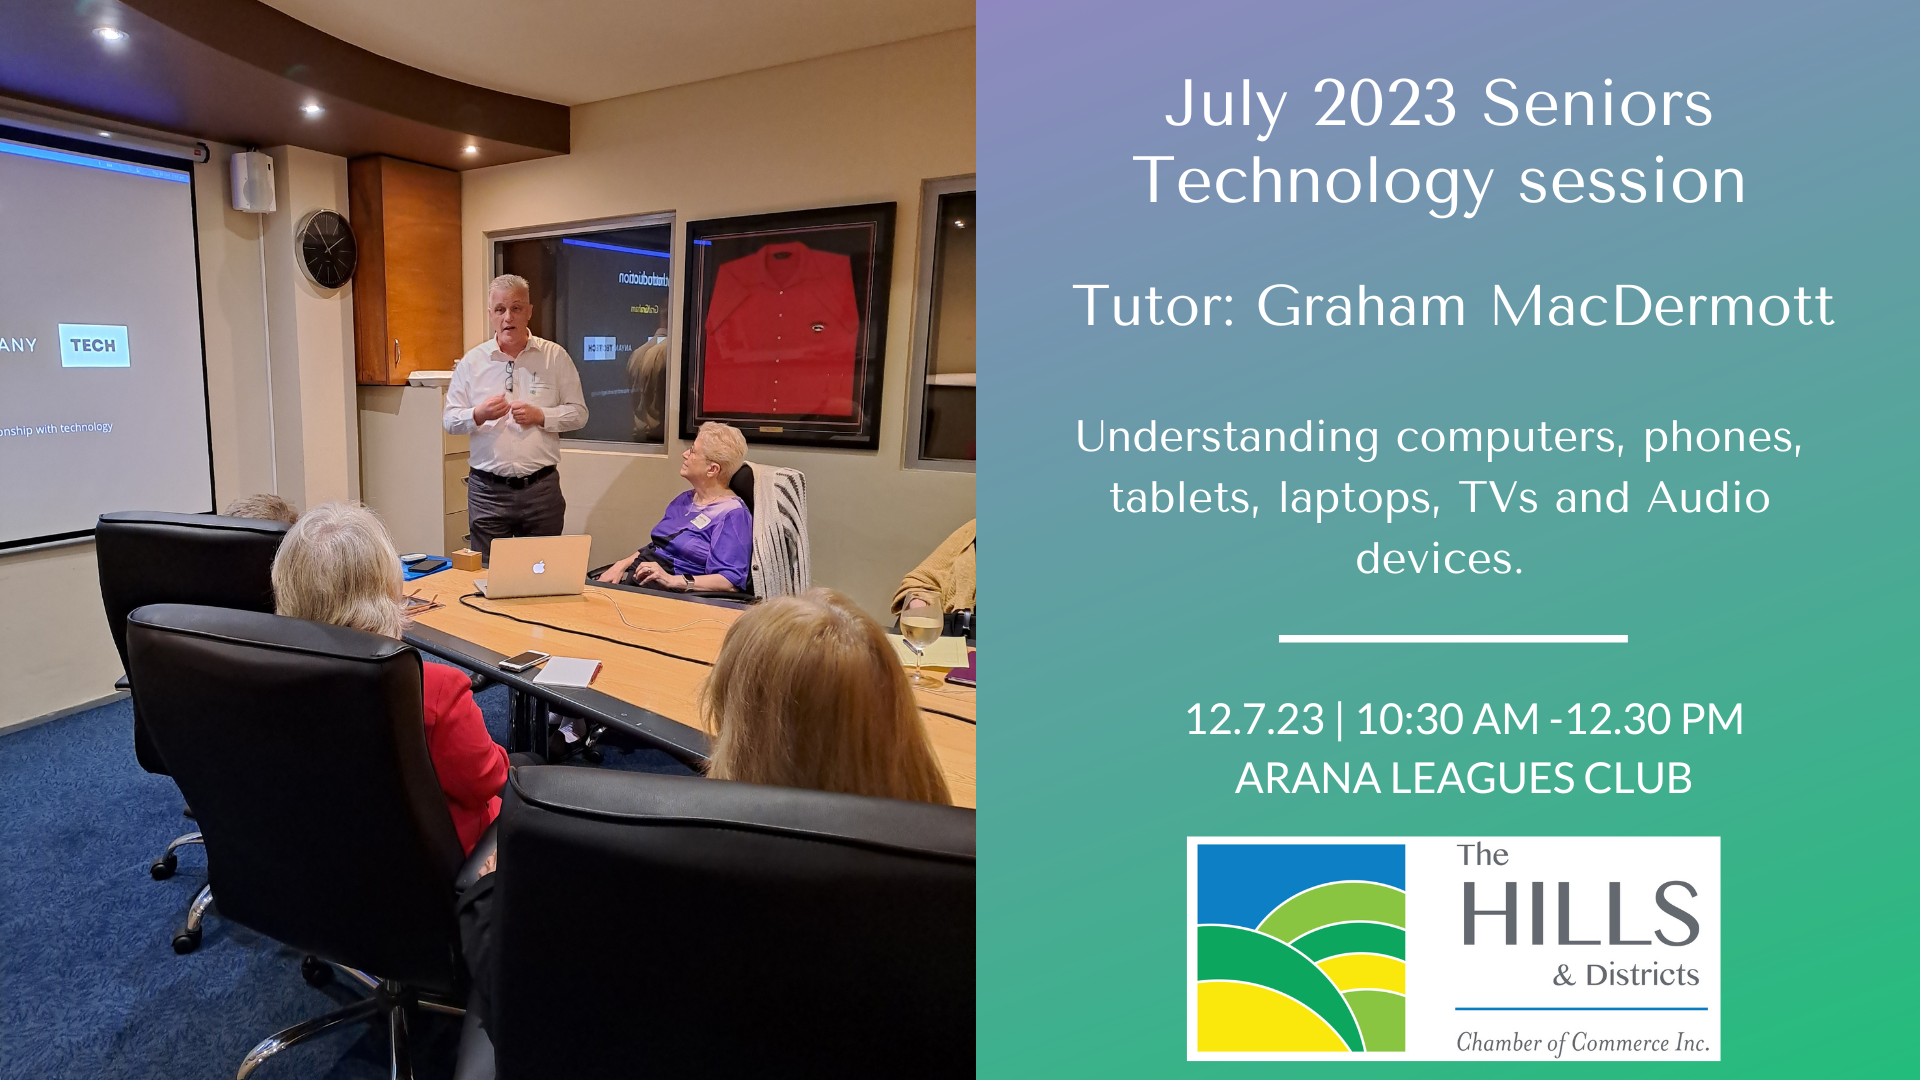 Seniors Event » July 2023 Seniors Technology Session